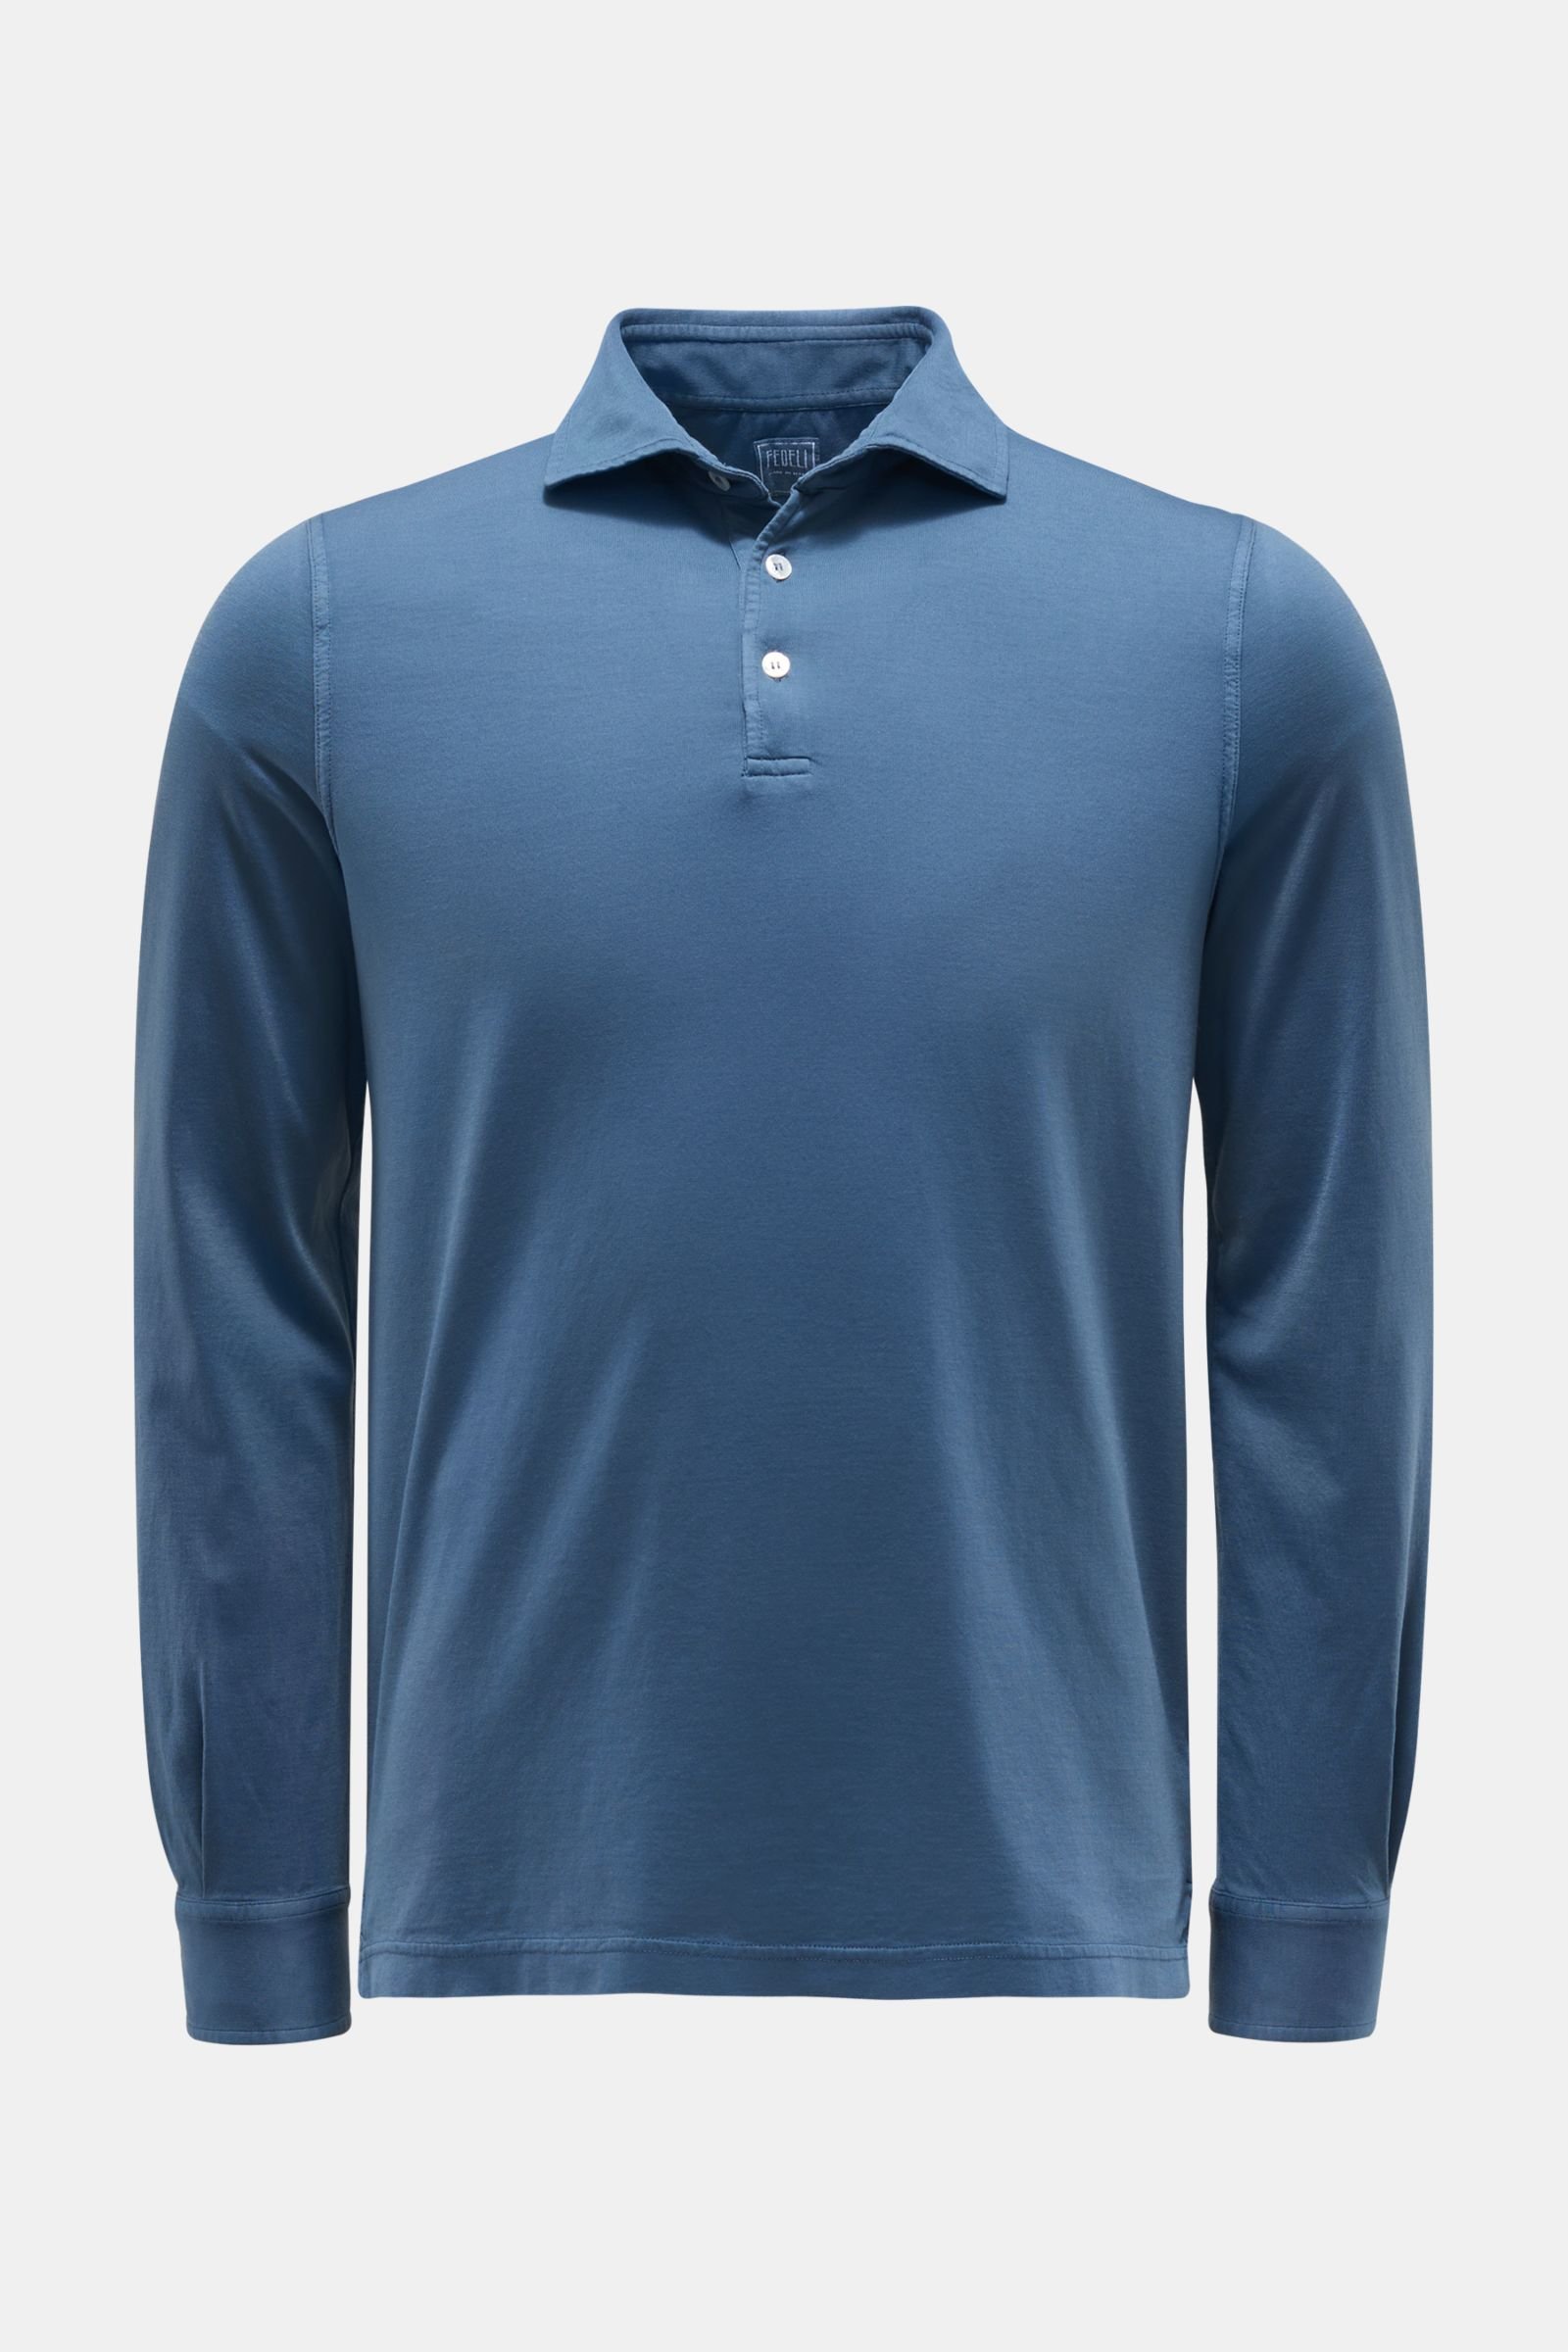 Jersey long sleeve polo shirt 'Zero' grey-blue